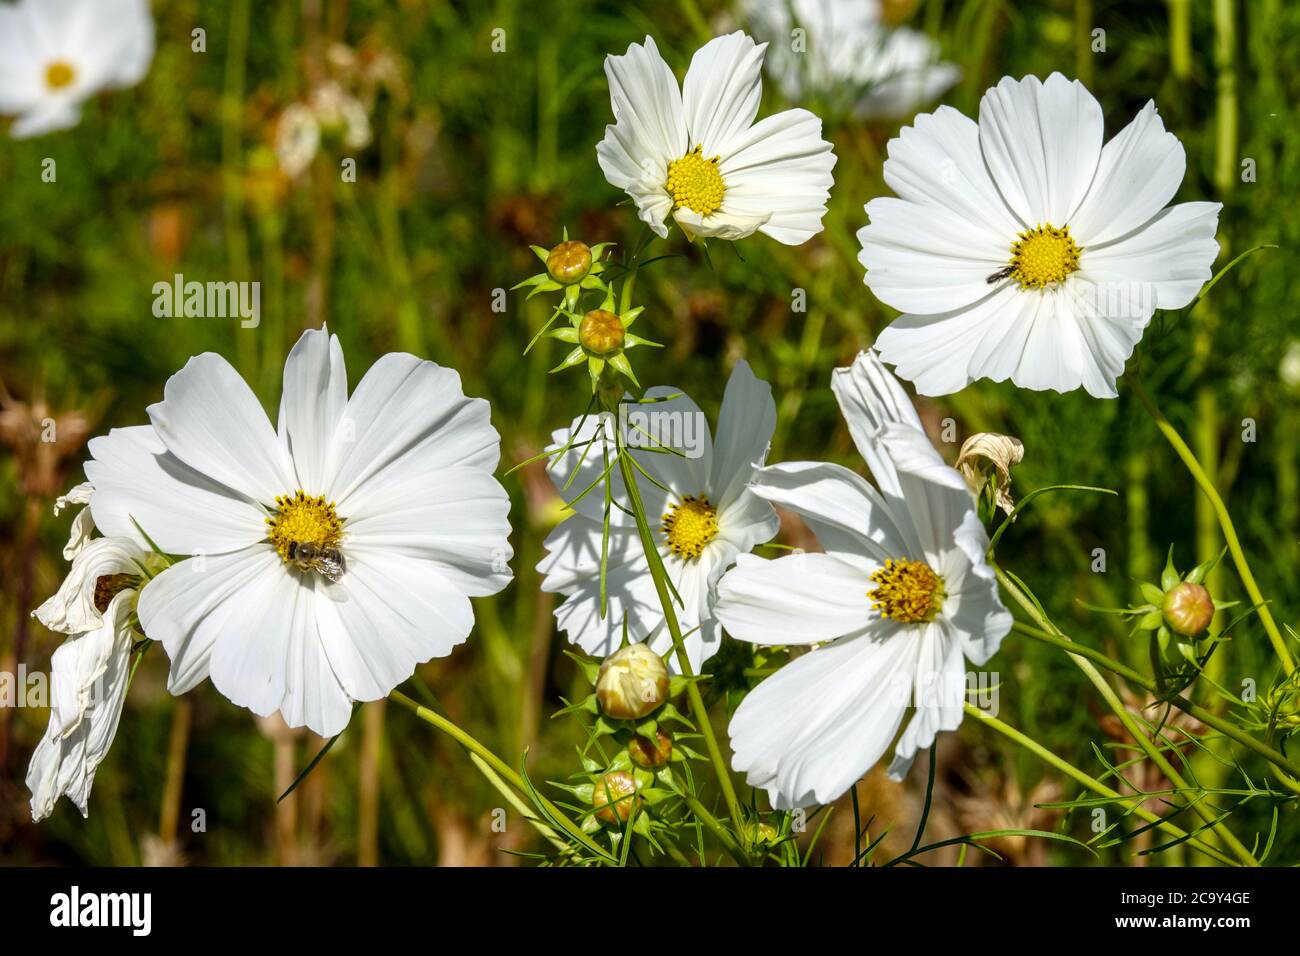 Cosmos bipinnatus 'Purity' hardy annual flowers Stock Photo